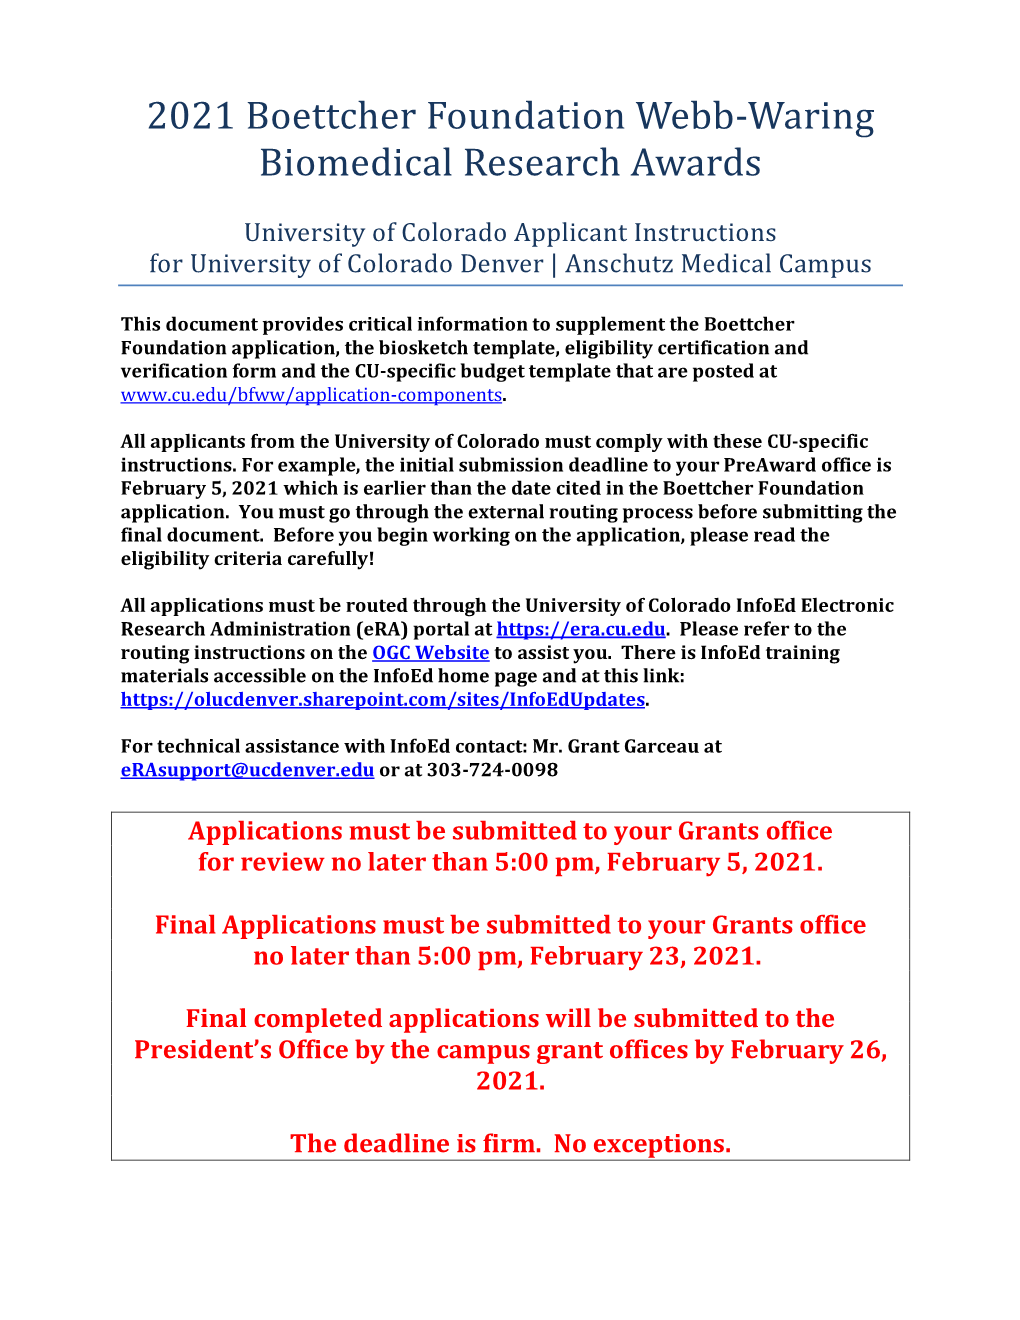 2021 Boettcher Foundation Webb-Waring Biomedical Research Awards